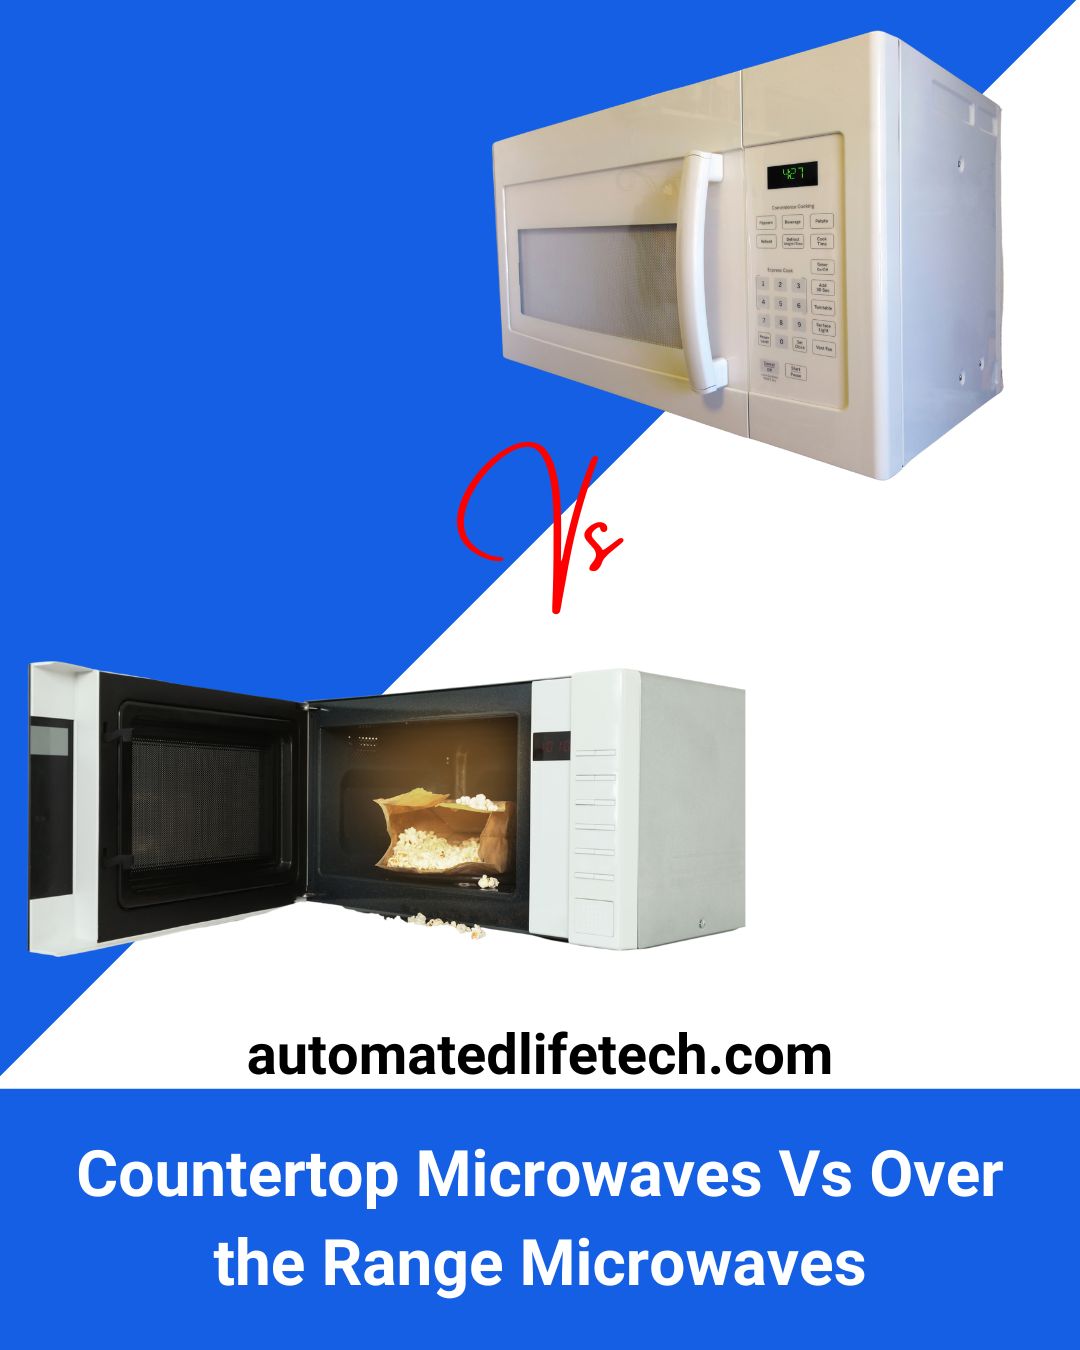 Countertop Microwaves Vs Over the Range Microwaves